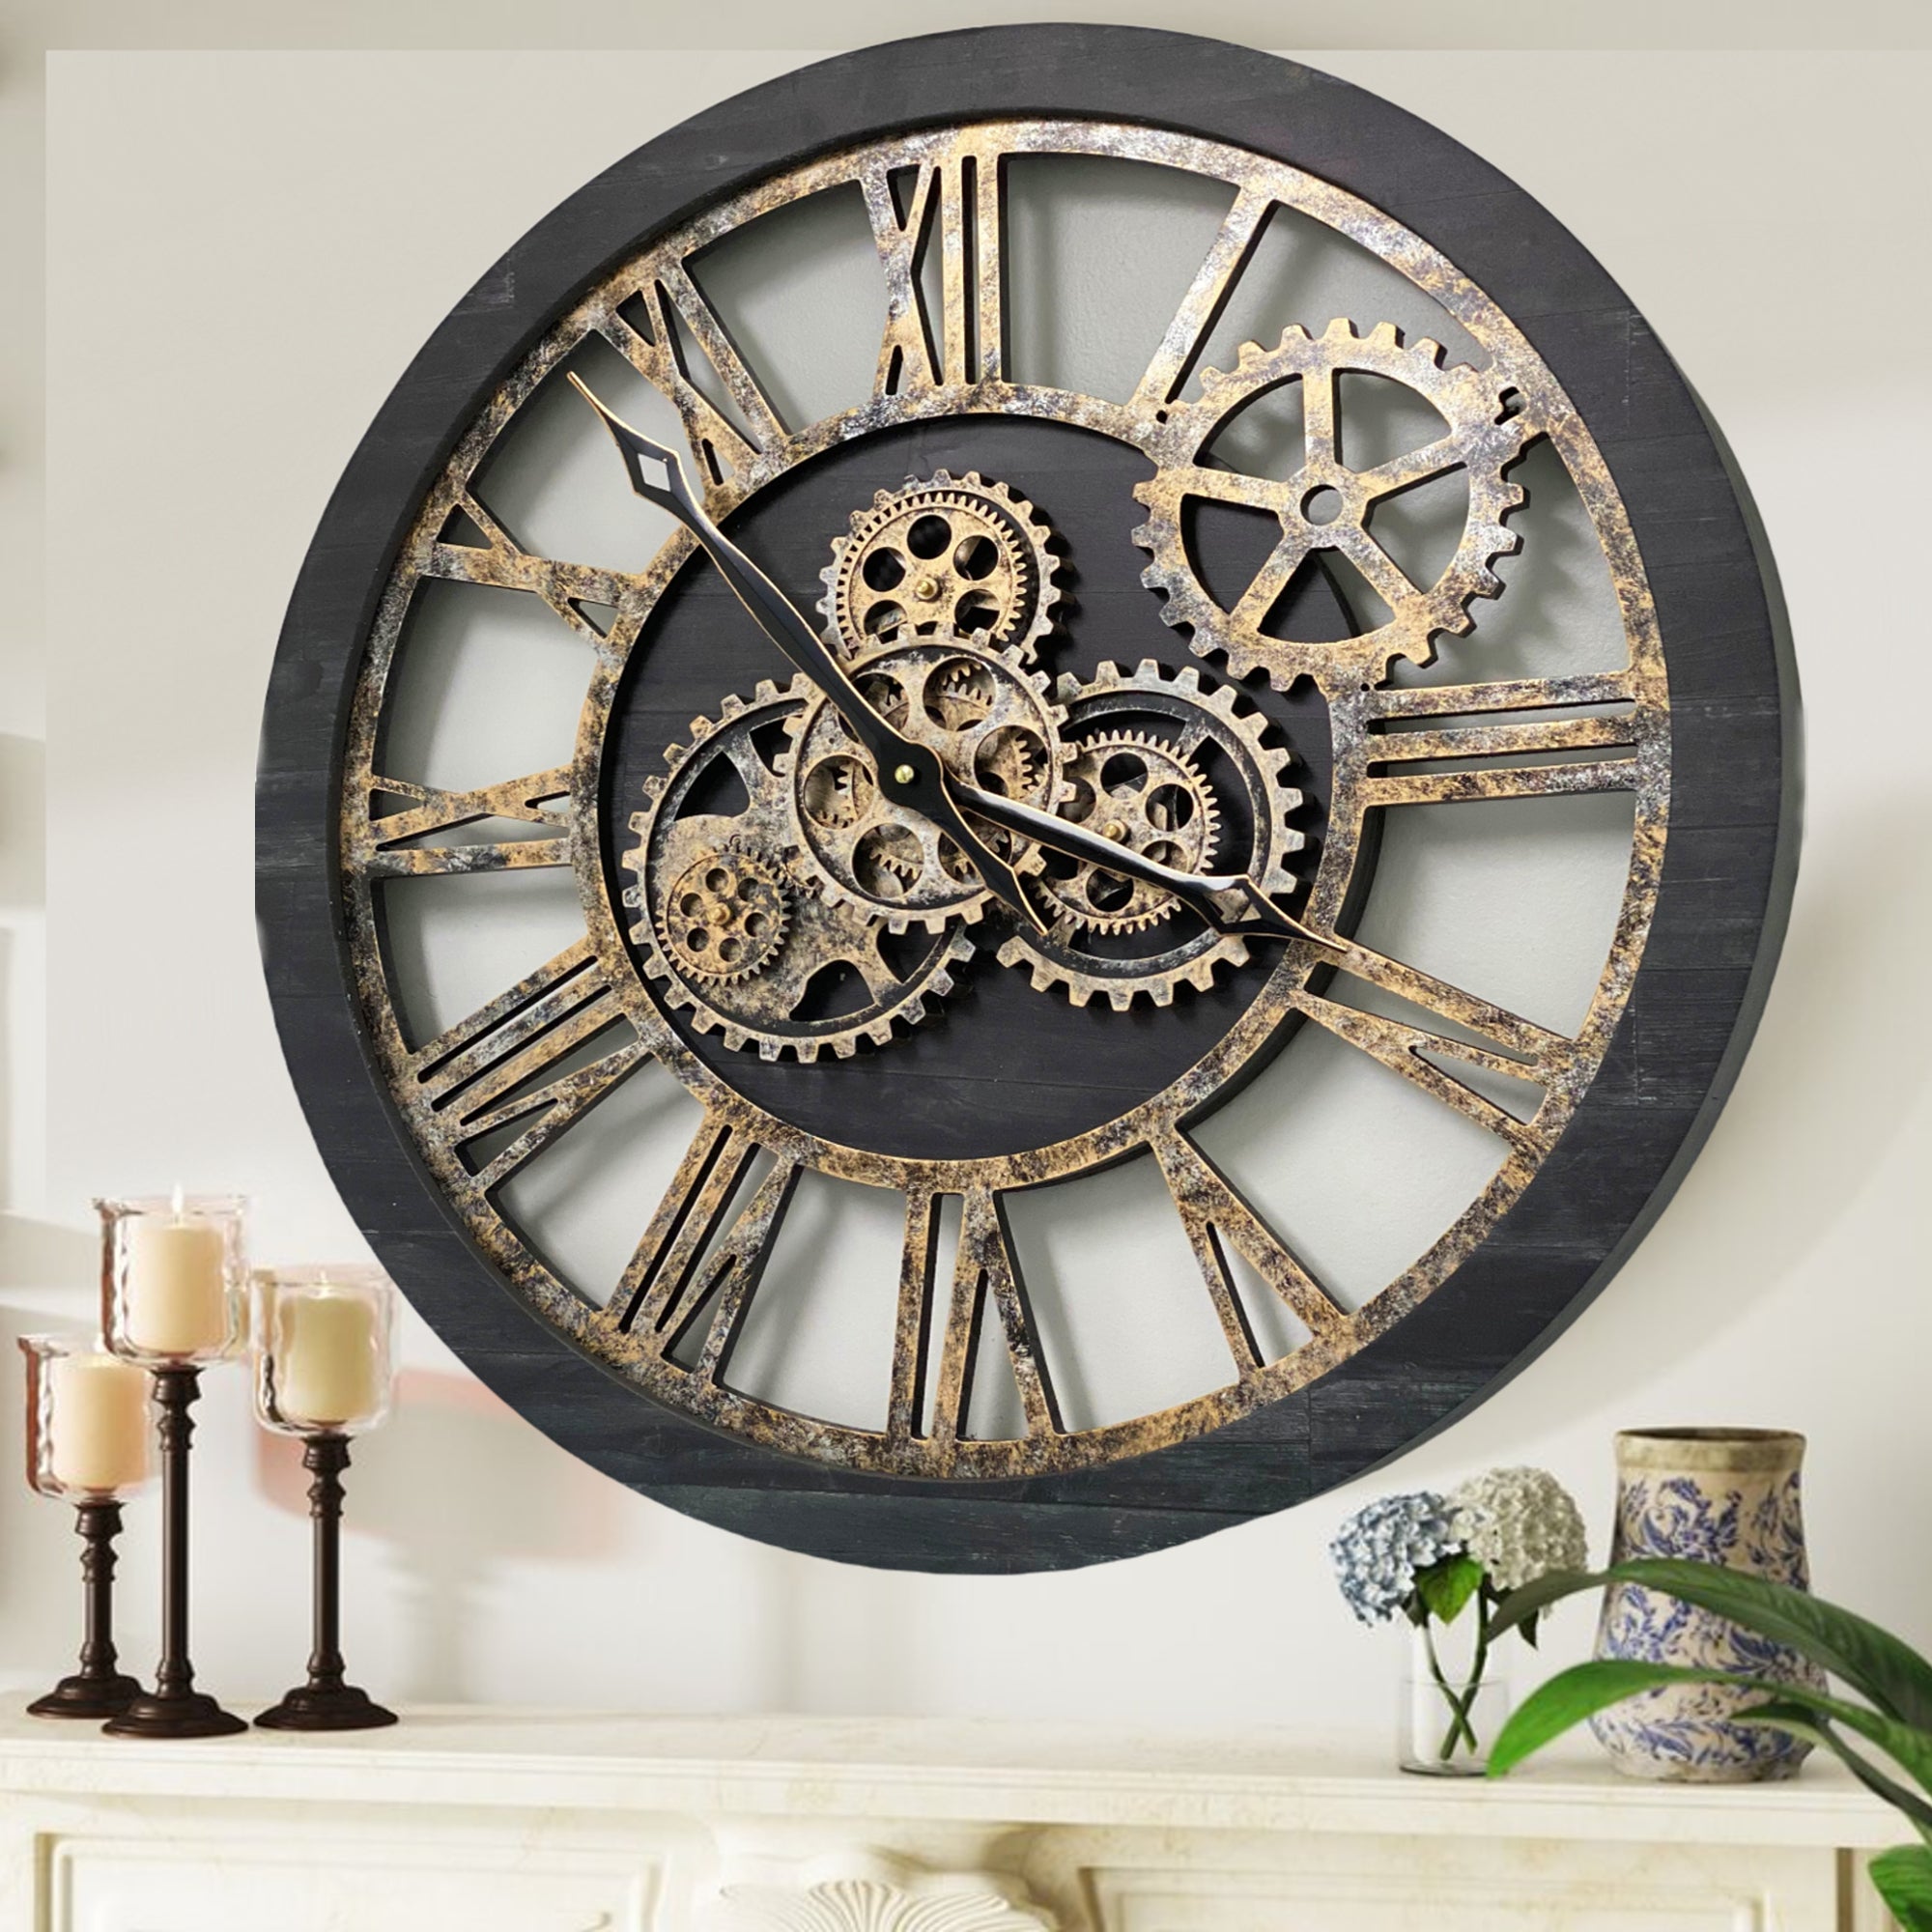 WALL CLOCK 24 INCH VINTAGE BLACK – The Gears Clock